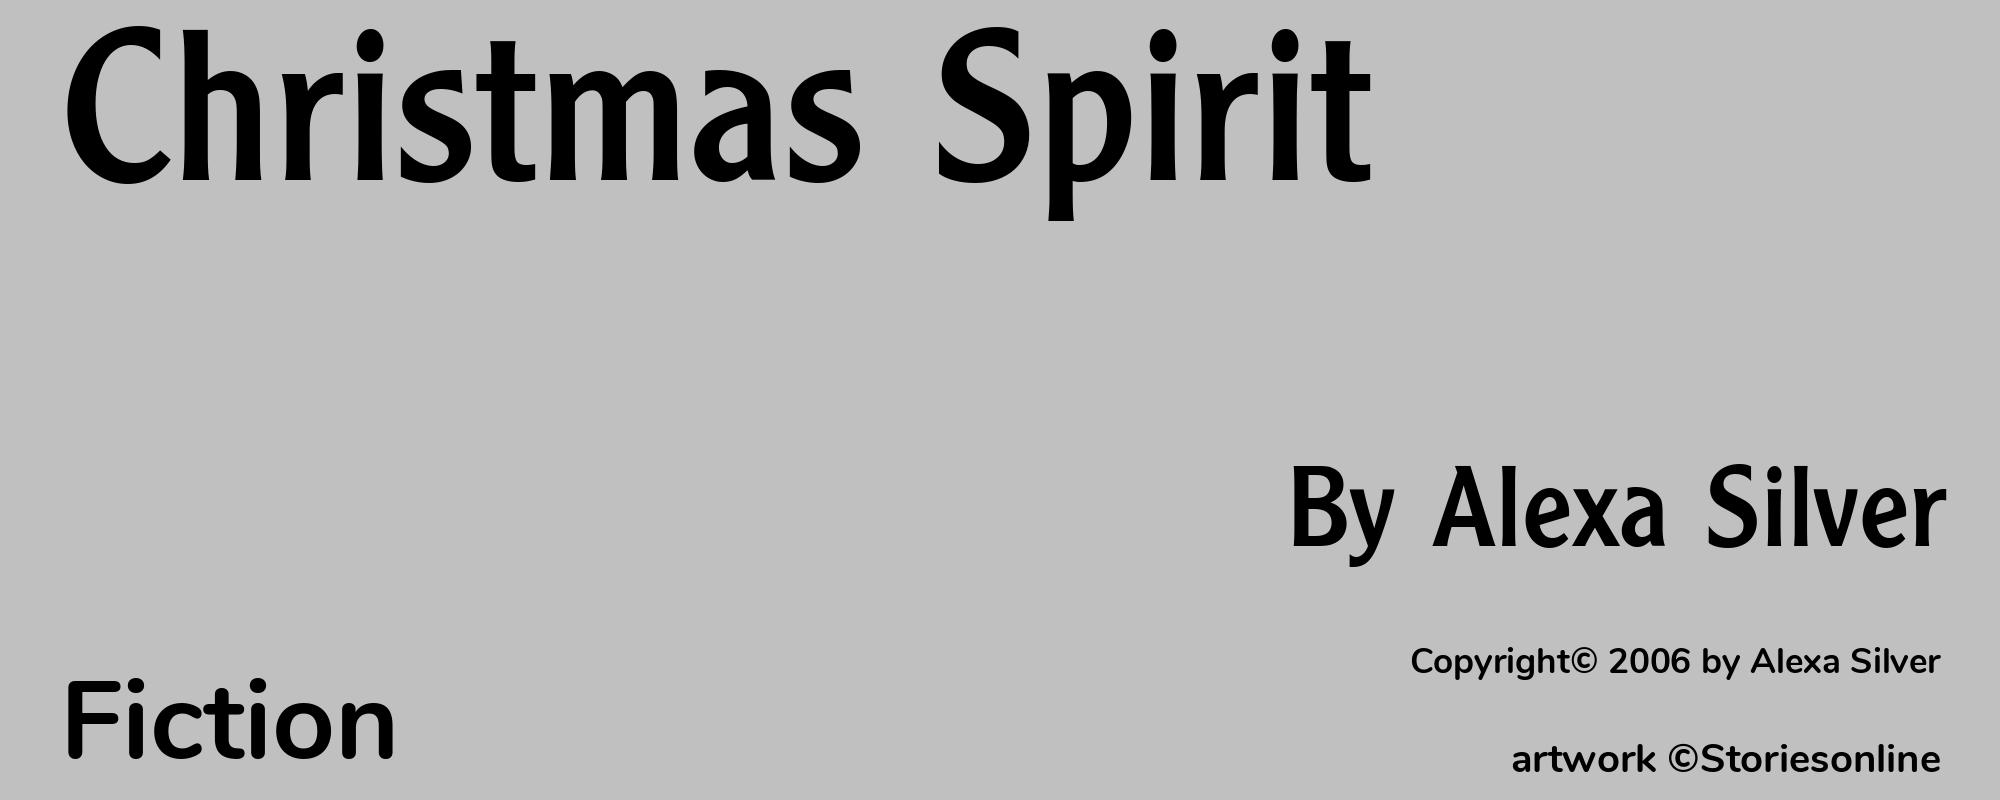 Christmas Spirit - Cover